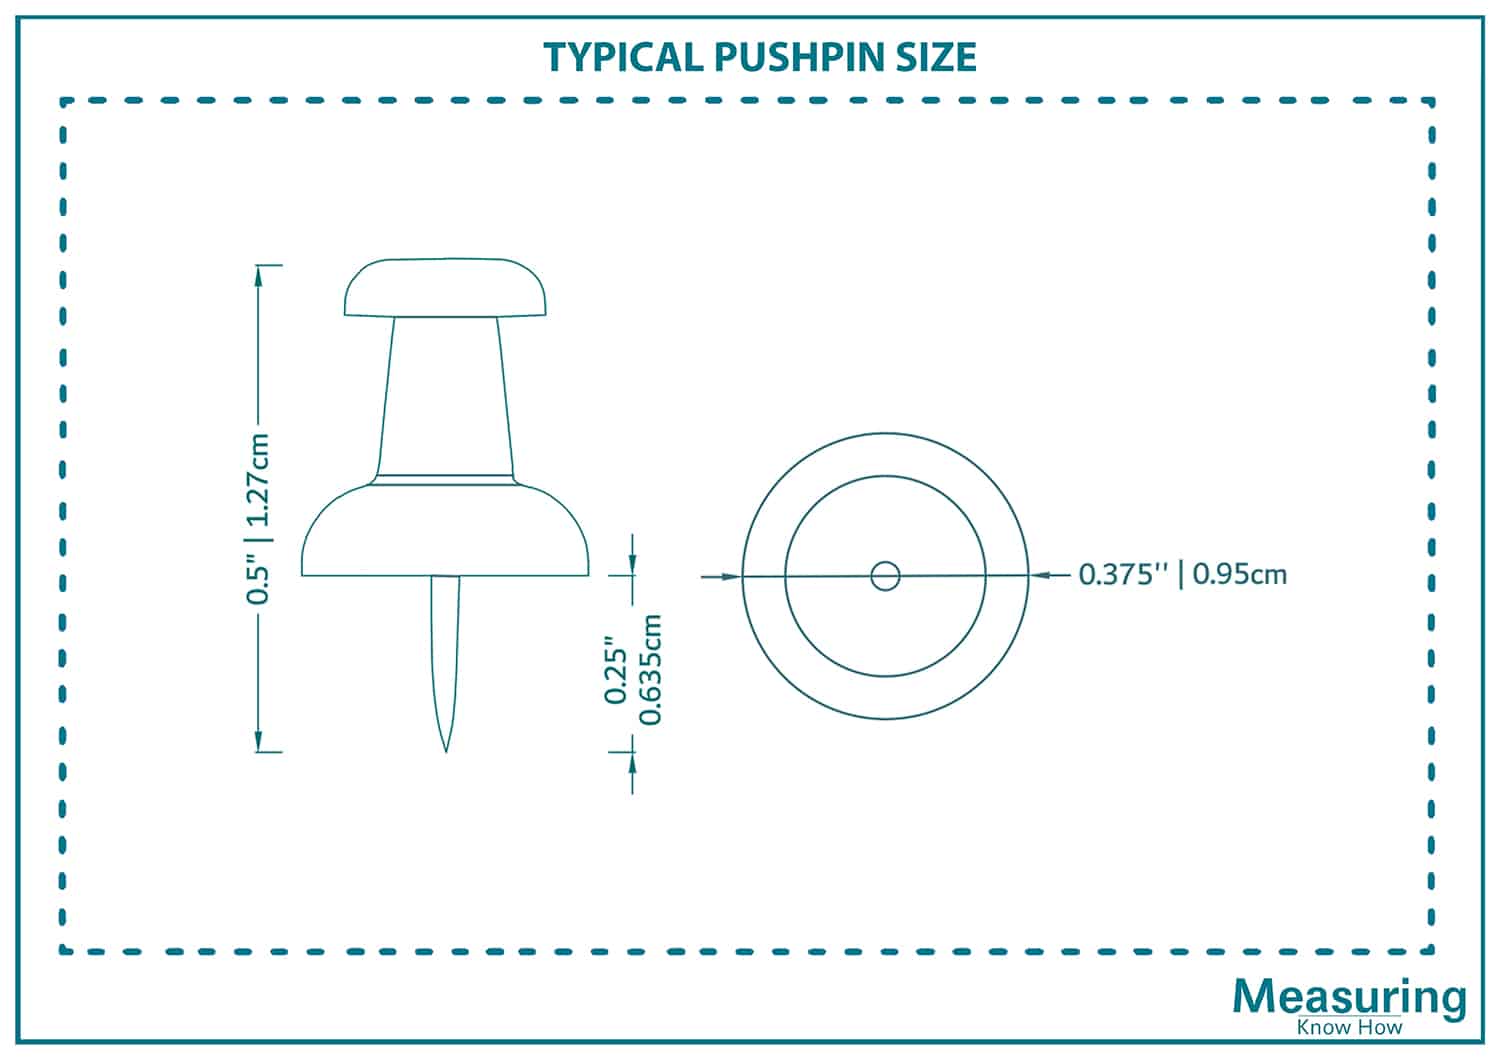 Typical pushpin size